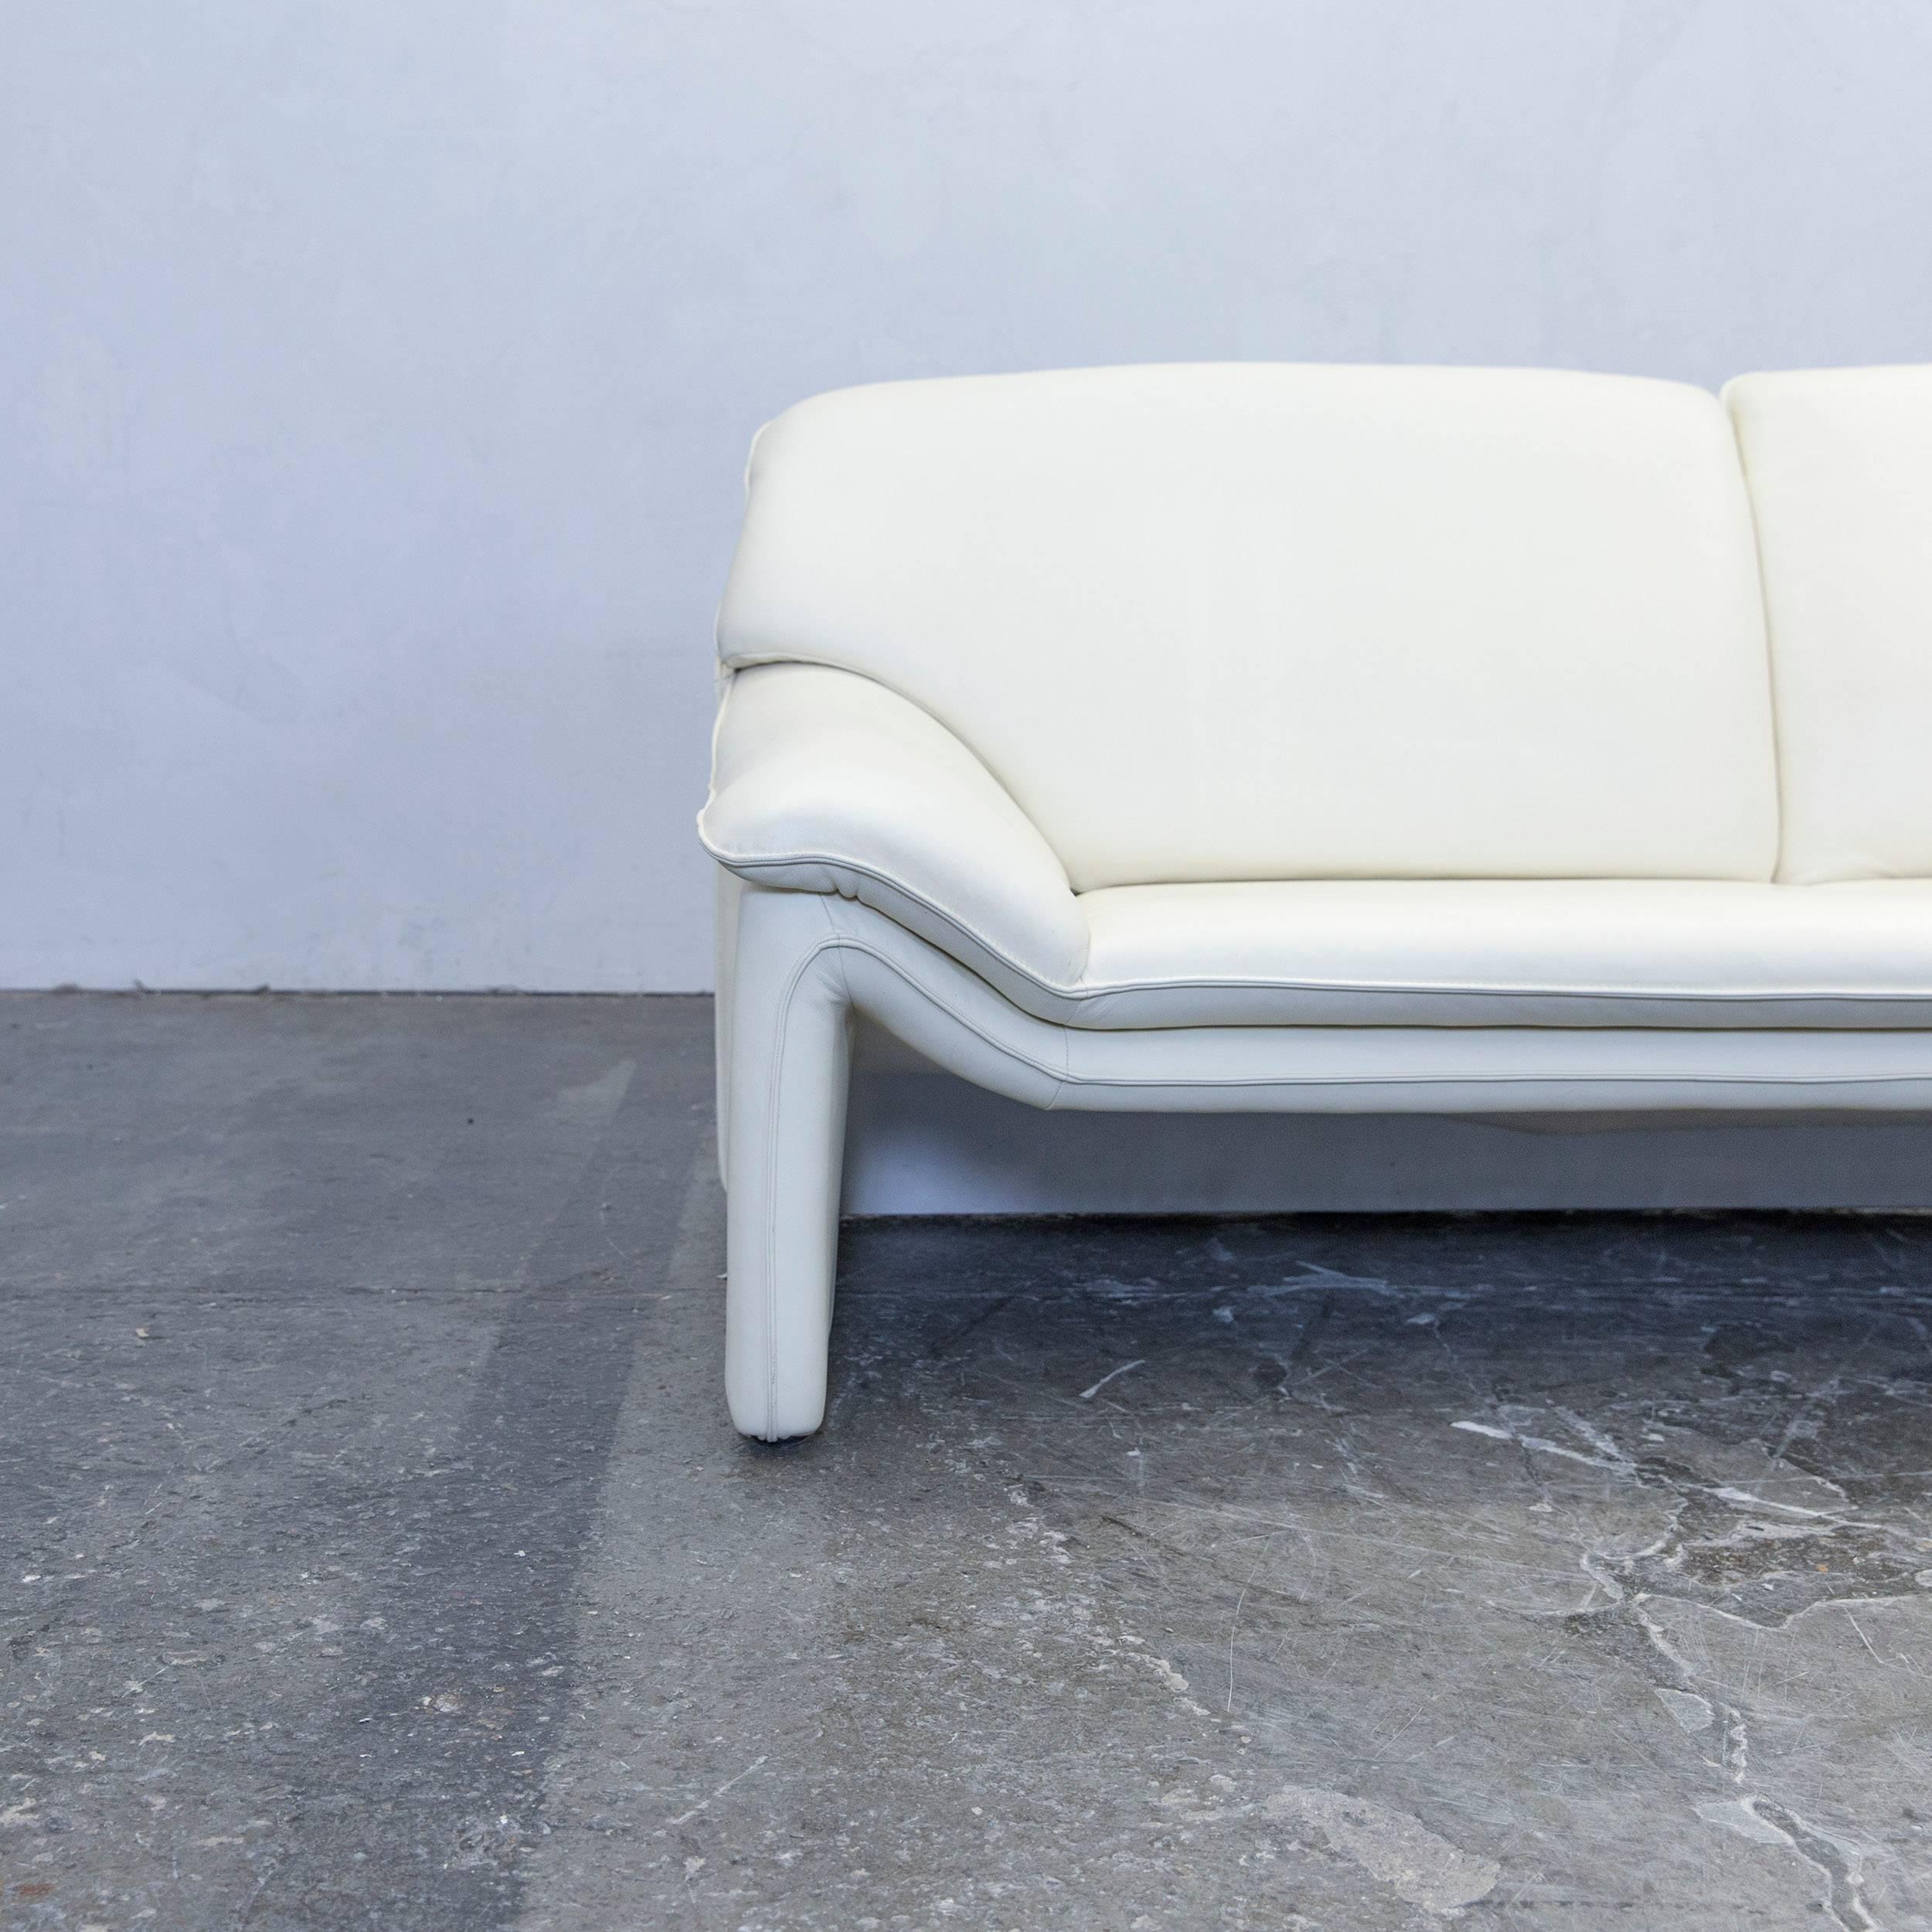 Crème colored original Laauser Atlanta designer leather sofa, in a minimalistic and modern design, made for pure comfort.